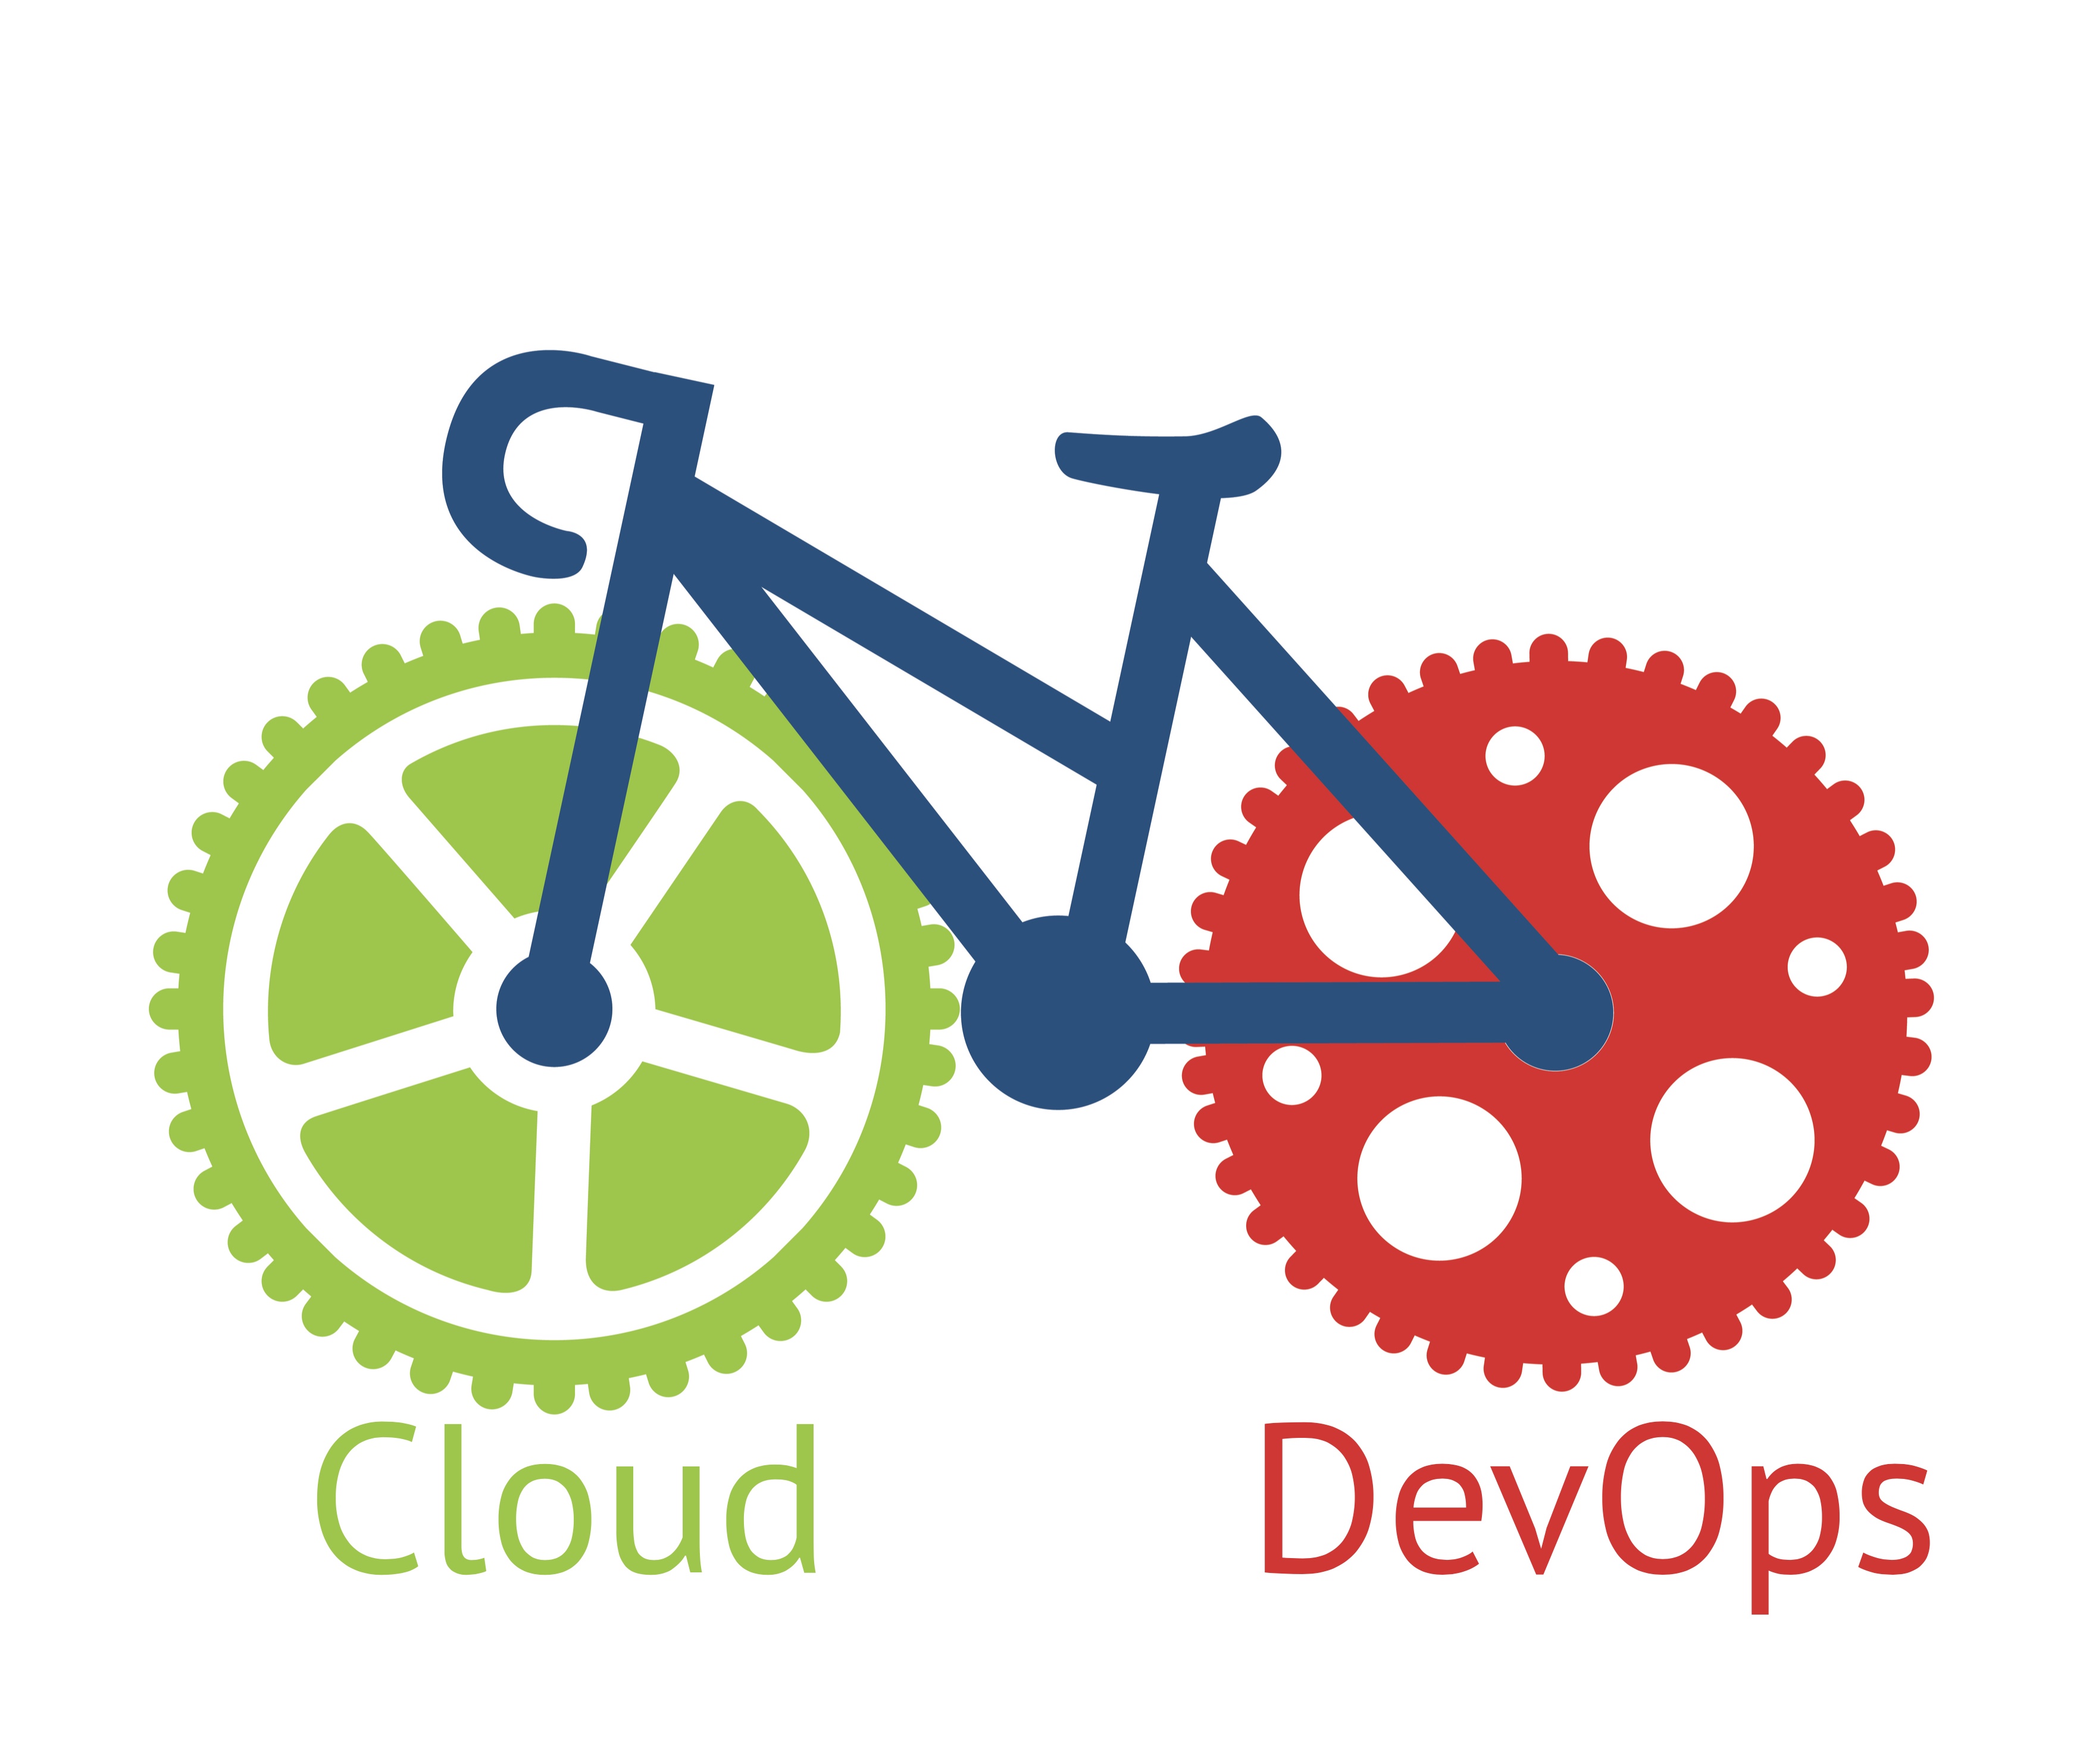 DevOps and Cloud Services